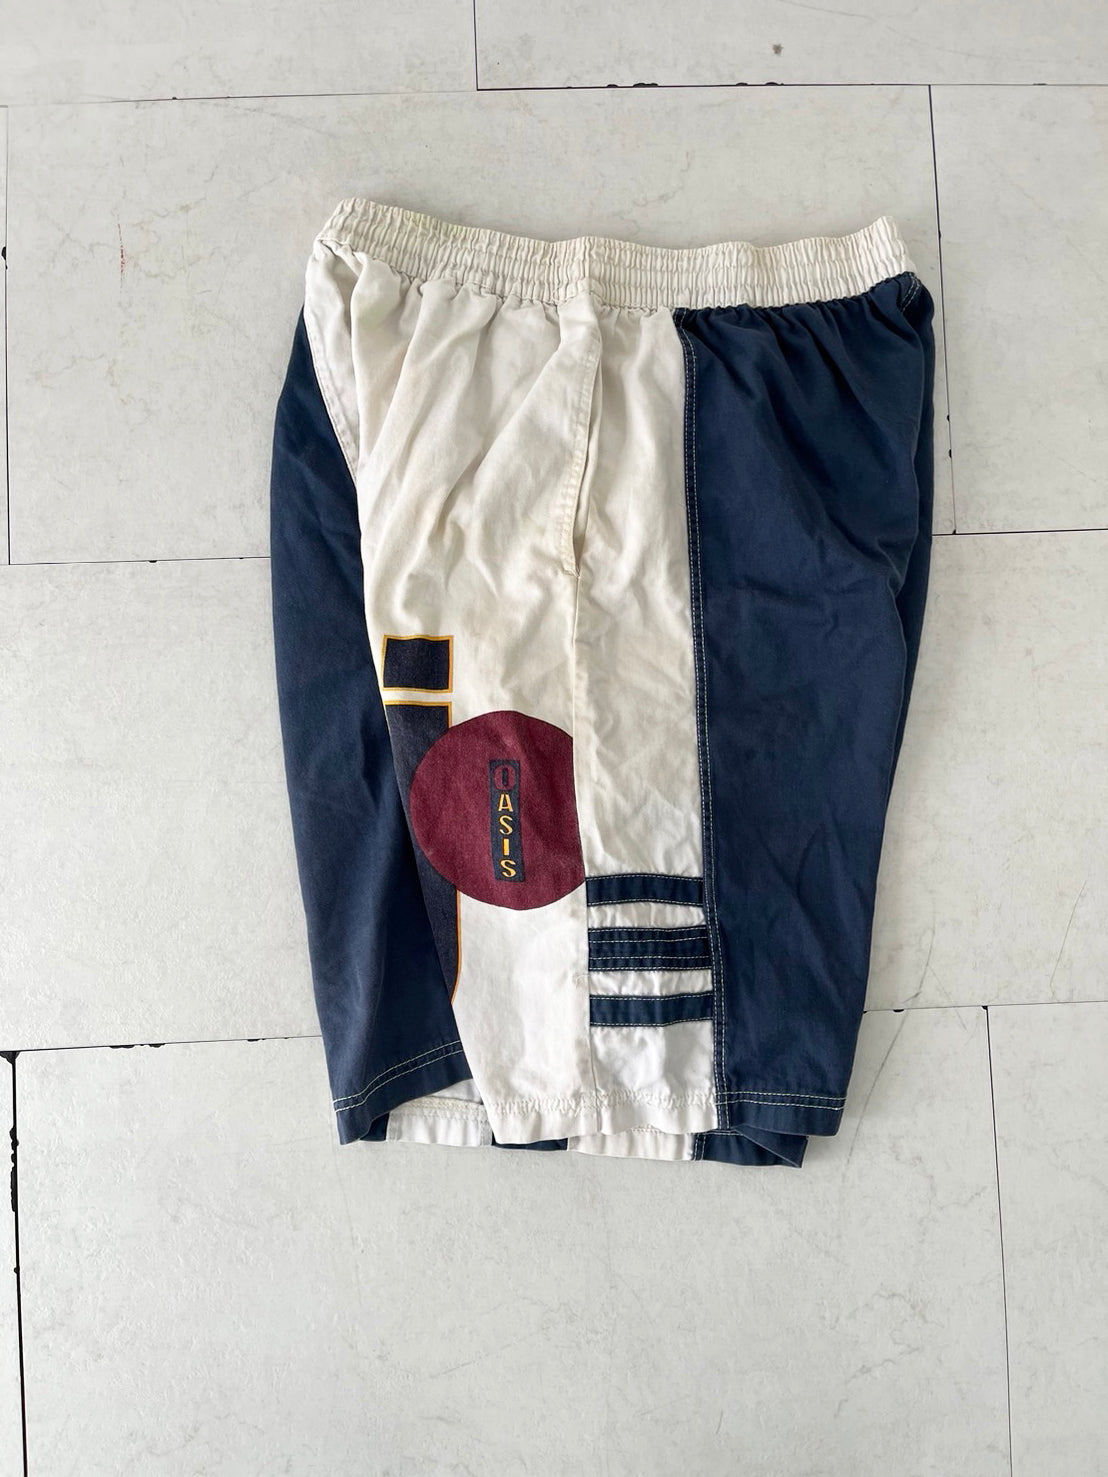 vintage WEST COAST PRO/AMTOUR beach shorts 水着 サーフパンツ ビーチショーツ(men's XL-2XL相当）